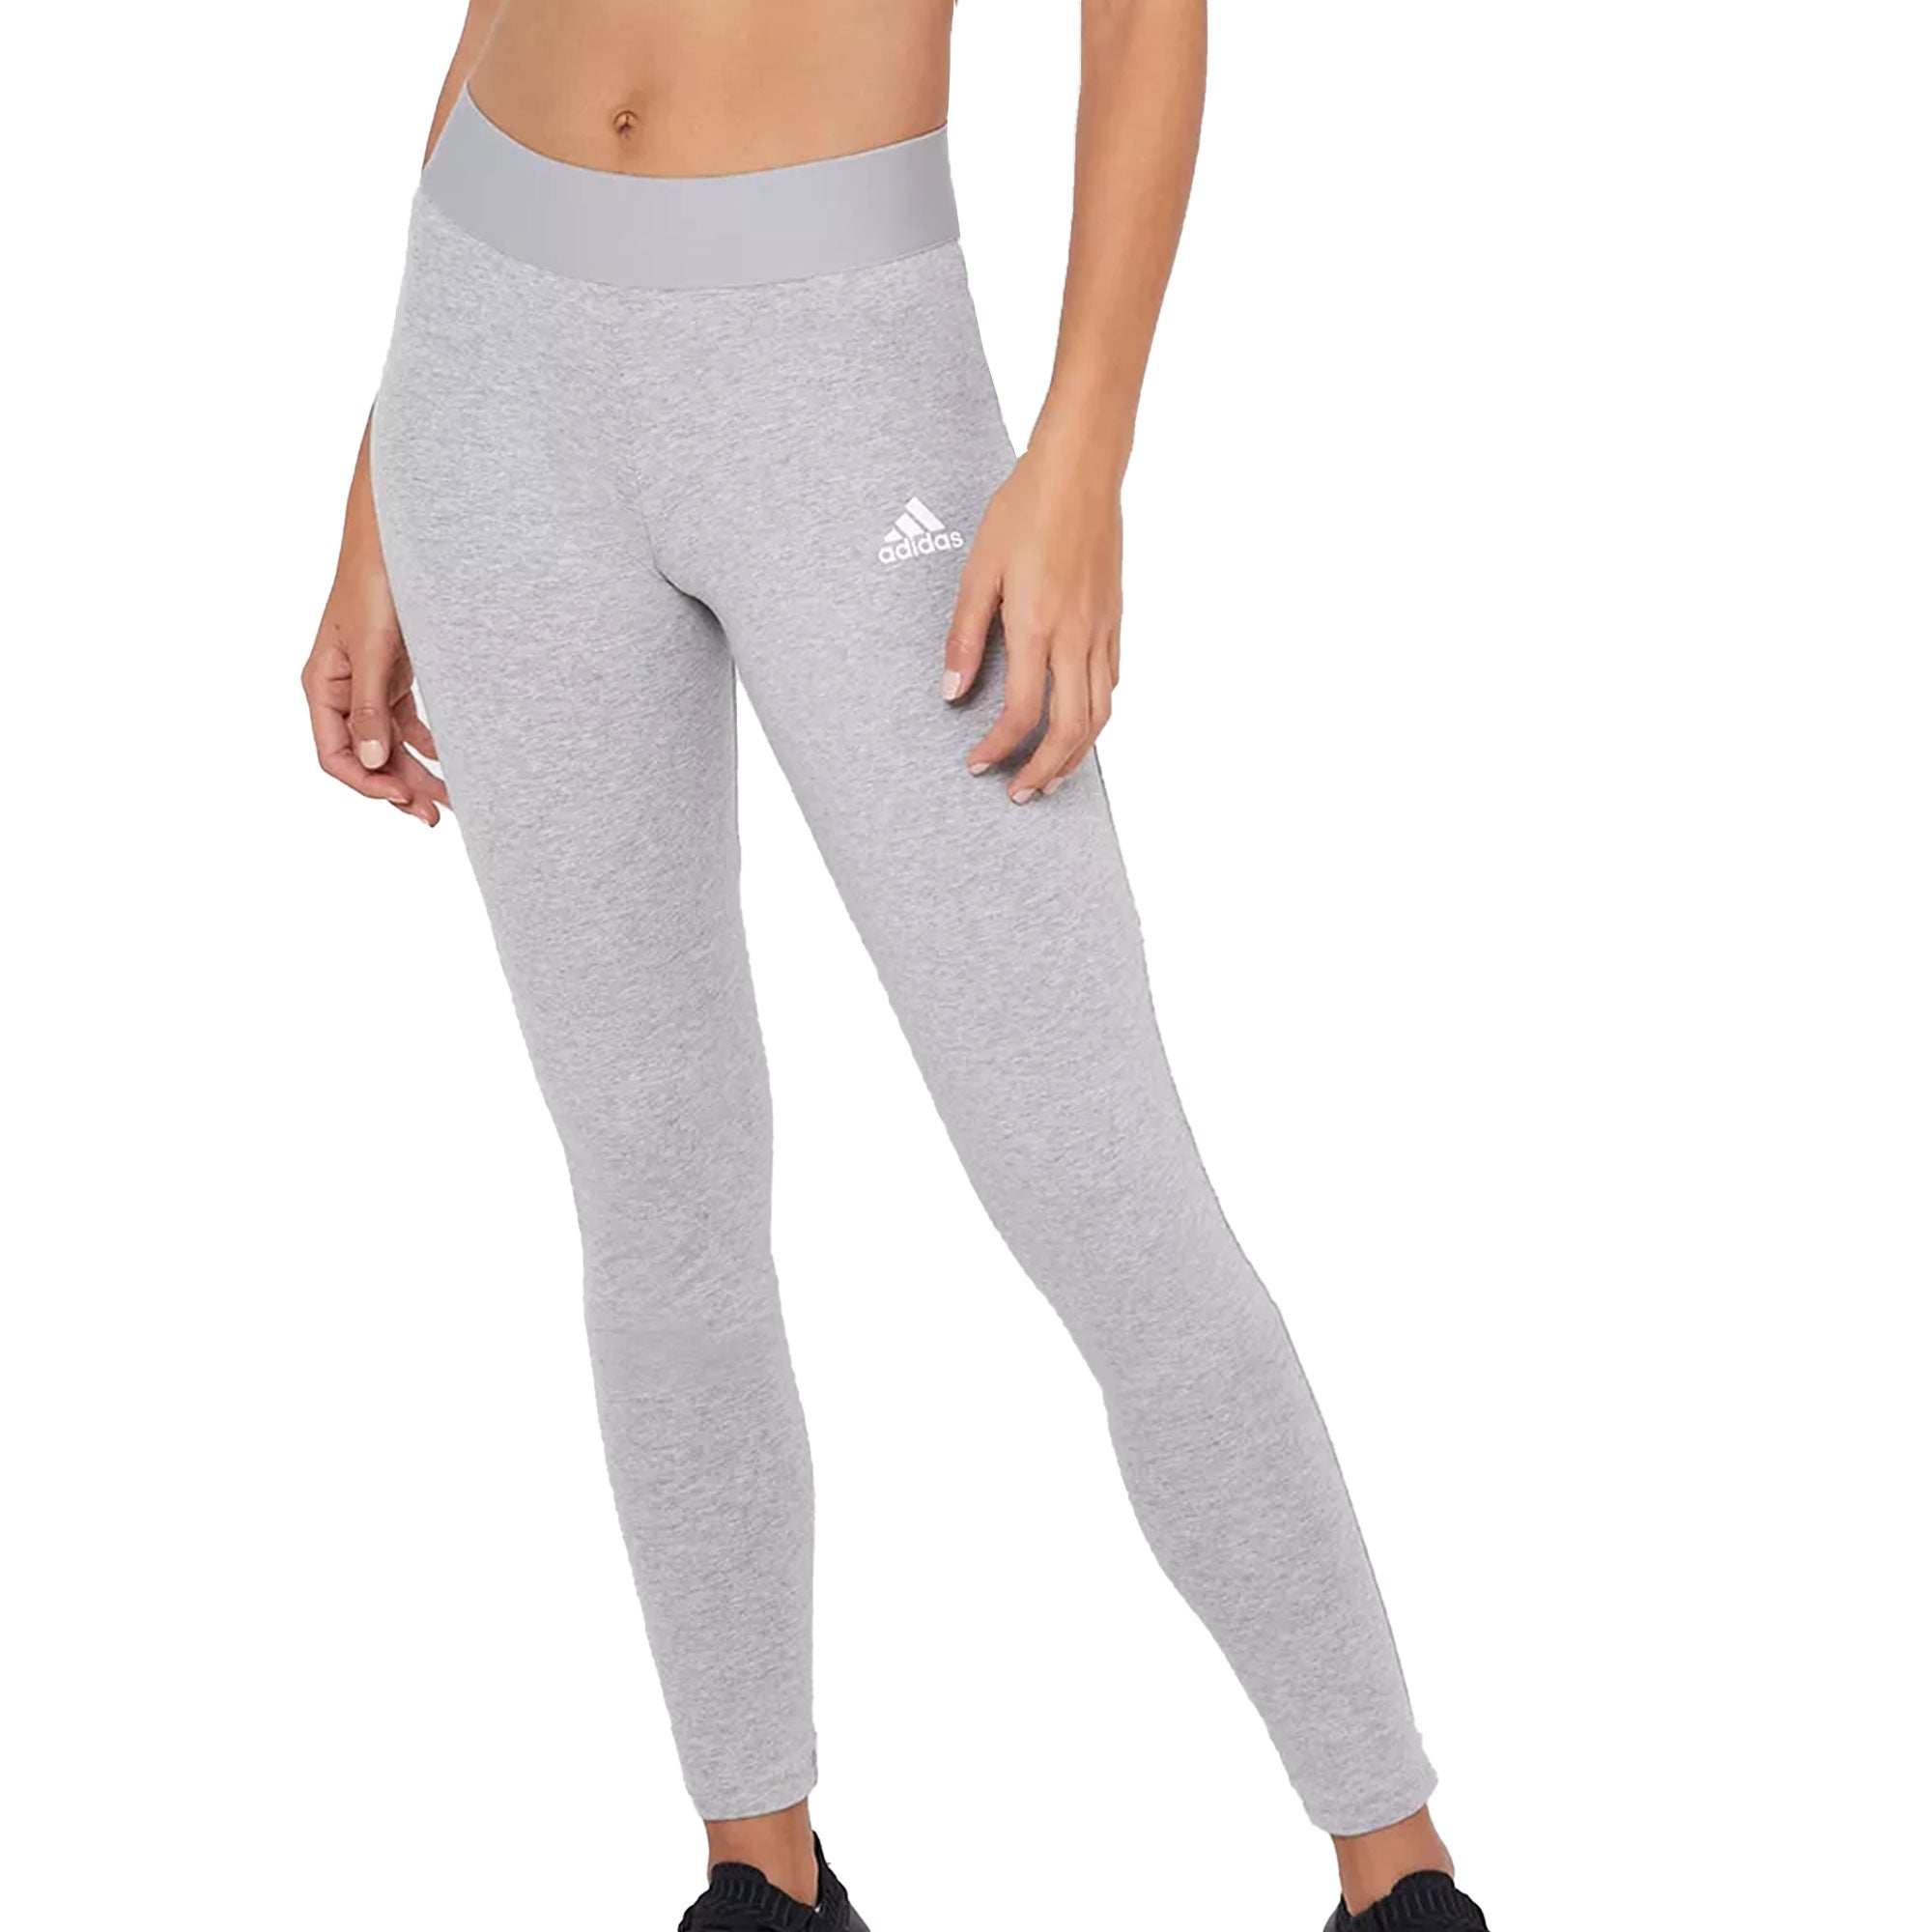 adidas Animal Legging Womens Active Pants Size XXS, Color: Black  Leopard/White at Amazon Women's Clothing store